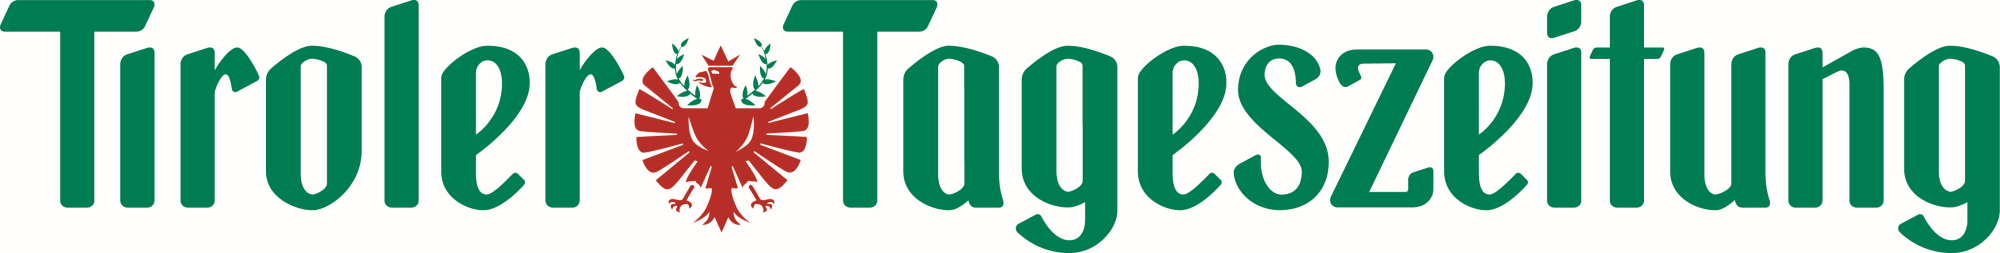 TT Logo 2018 cmyk